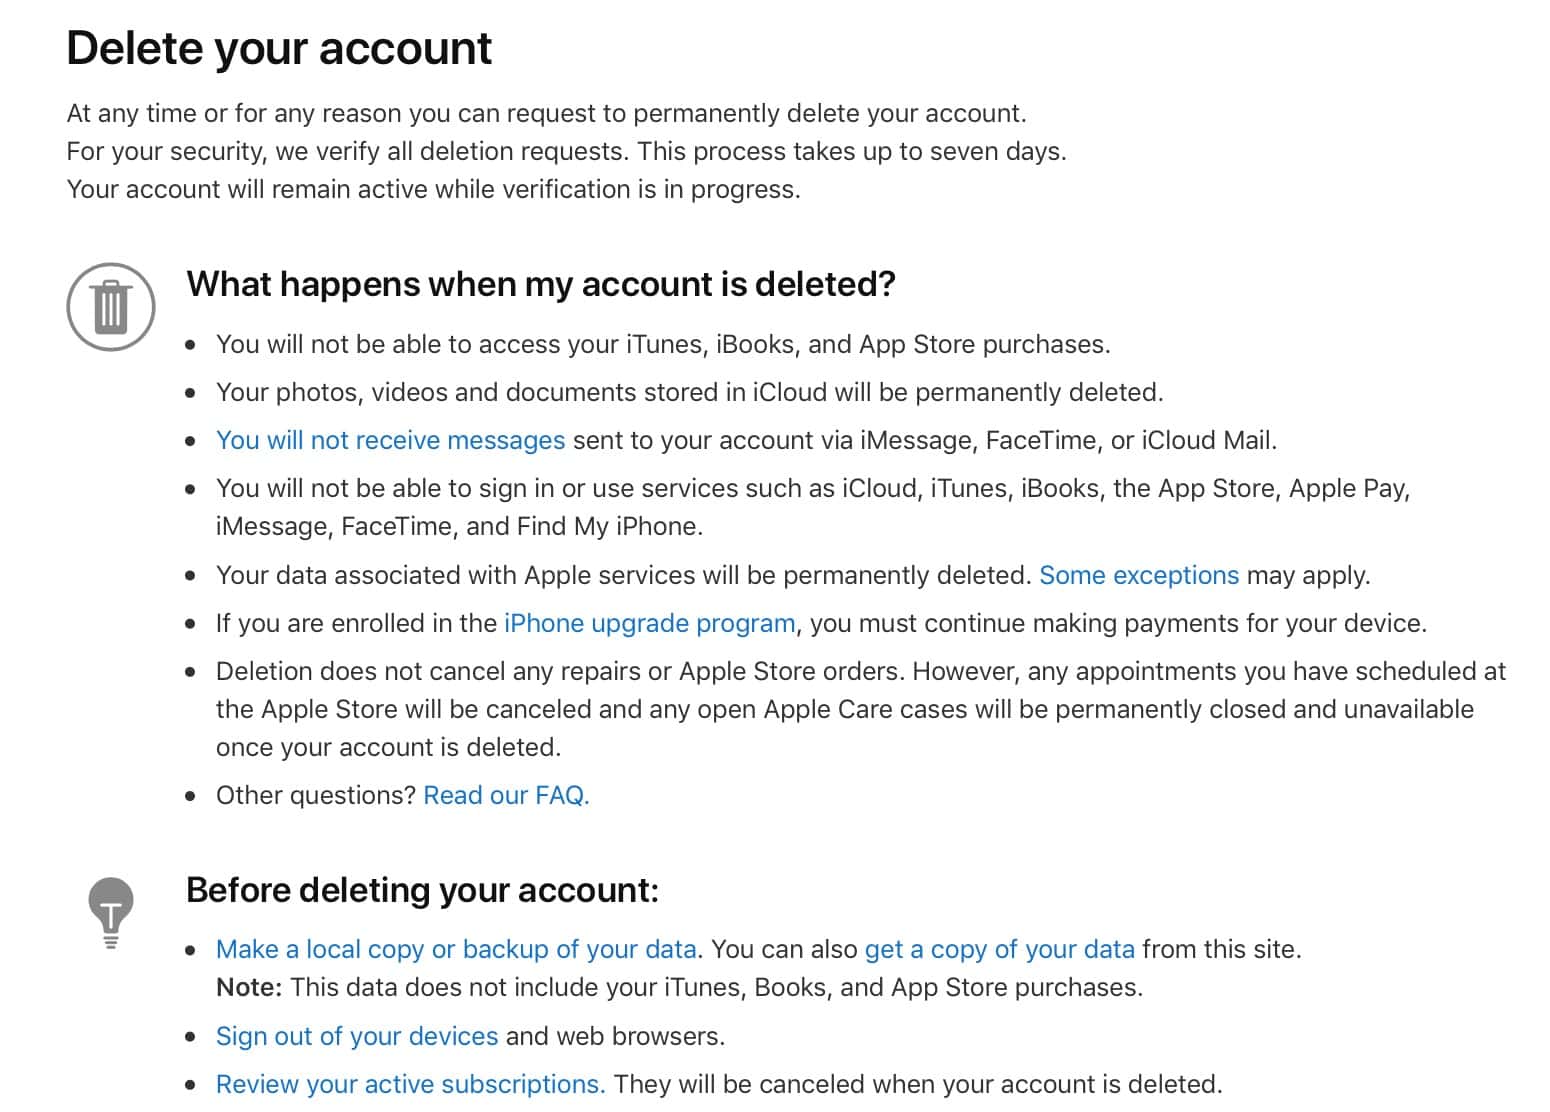 "Delete your account" Screen